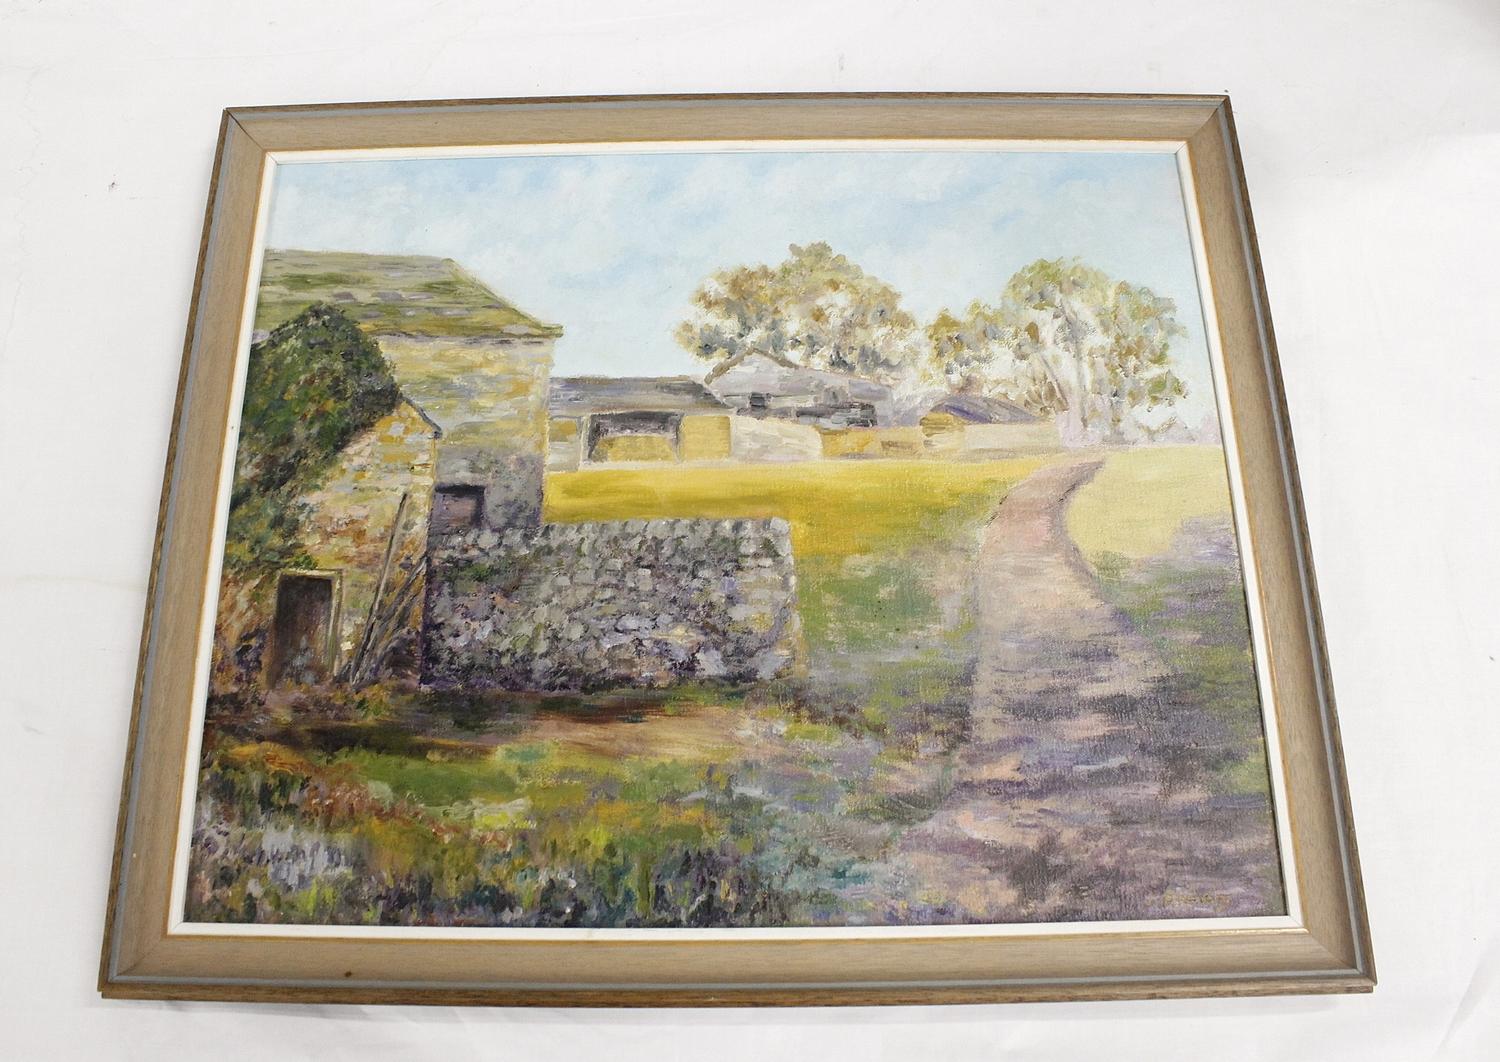 J Appleby.Dukesfield Farm, Northumberland.Oil on canvas, 45 x 55cm. Signed.